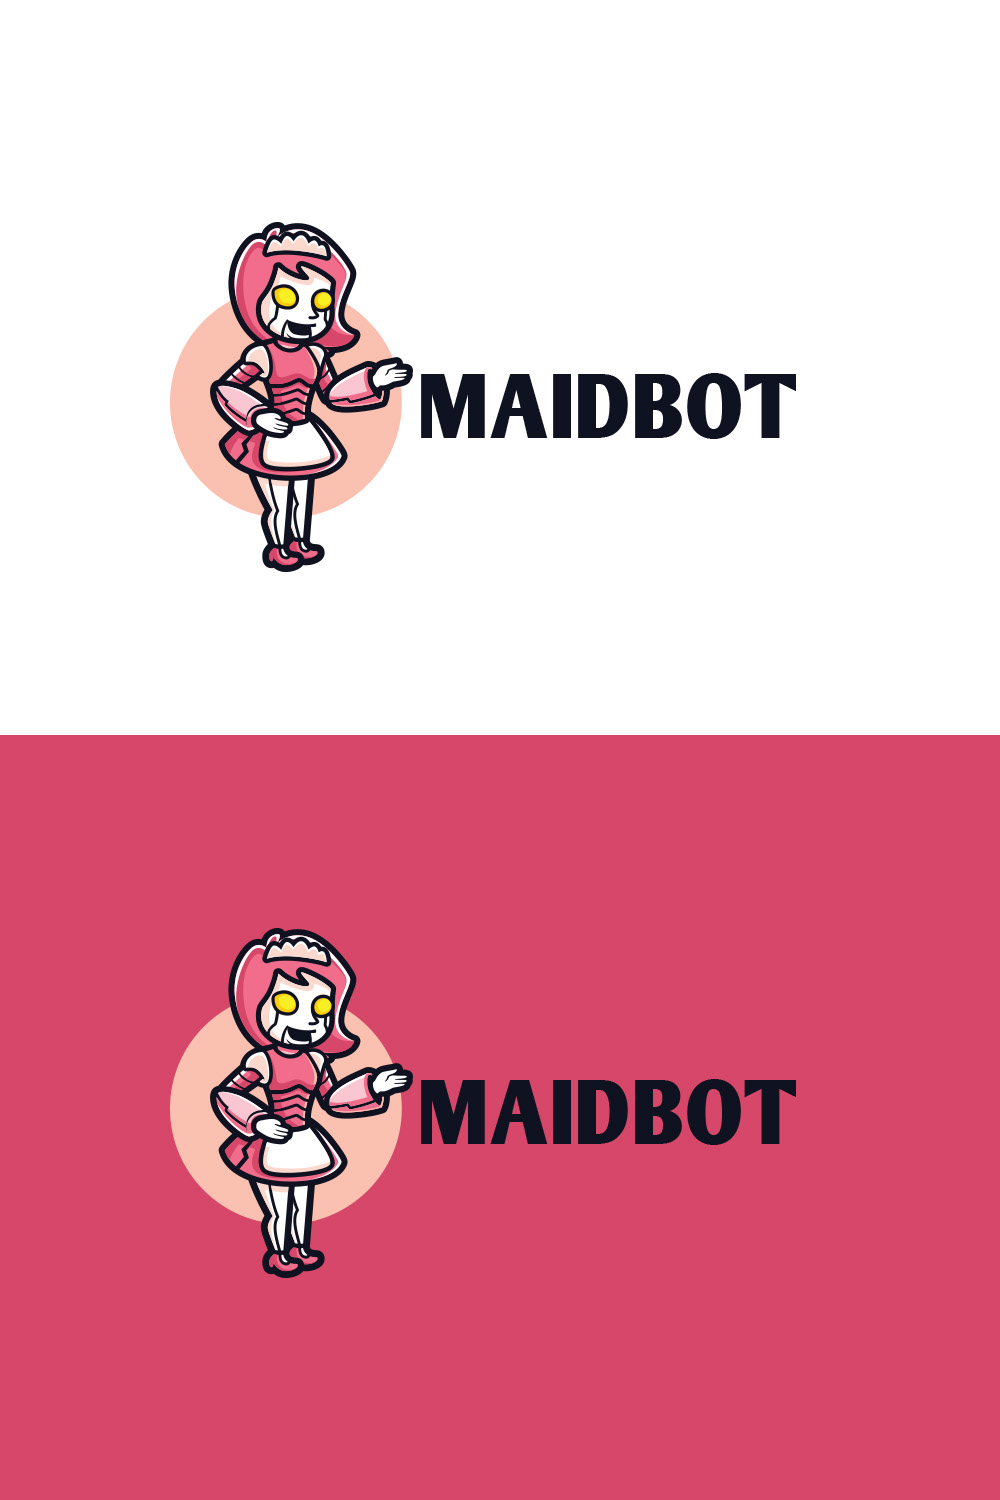 Maid Robot Character Mascot Logo Design pinterest preview image.